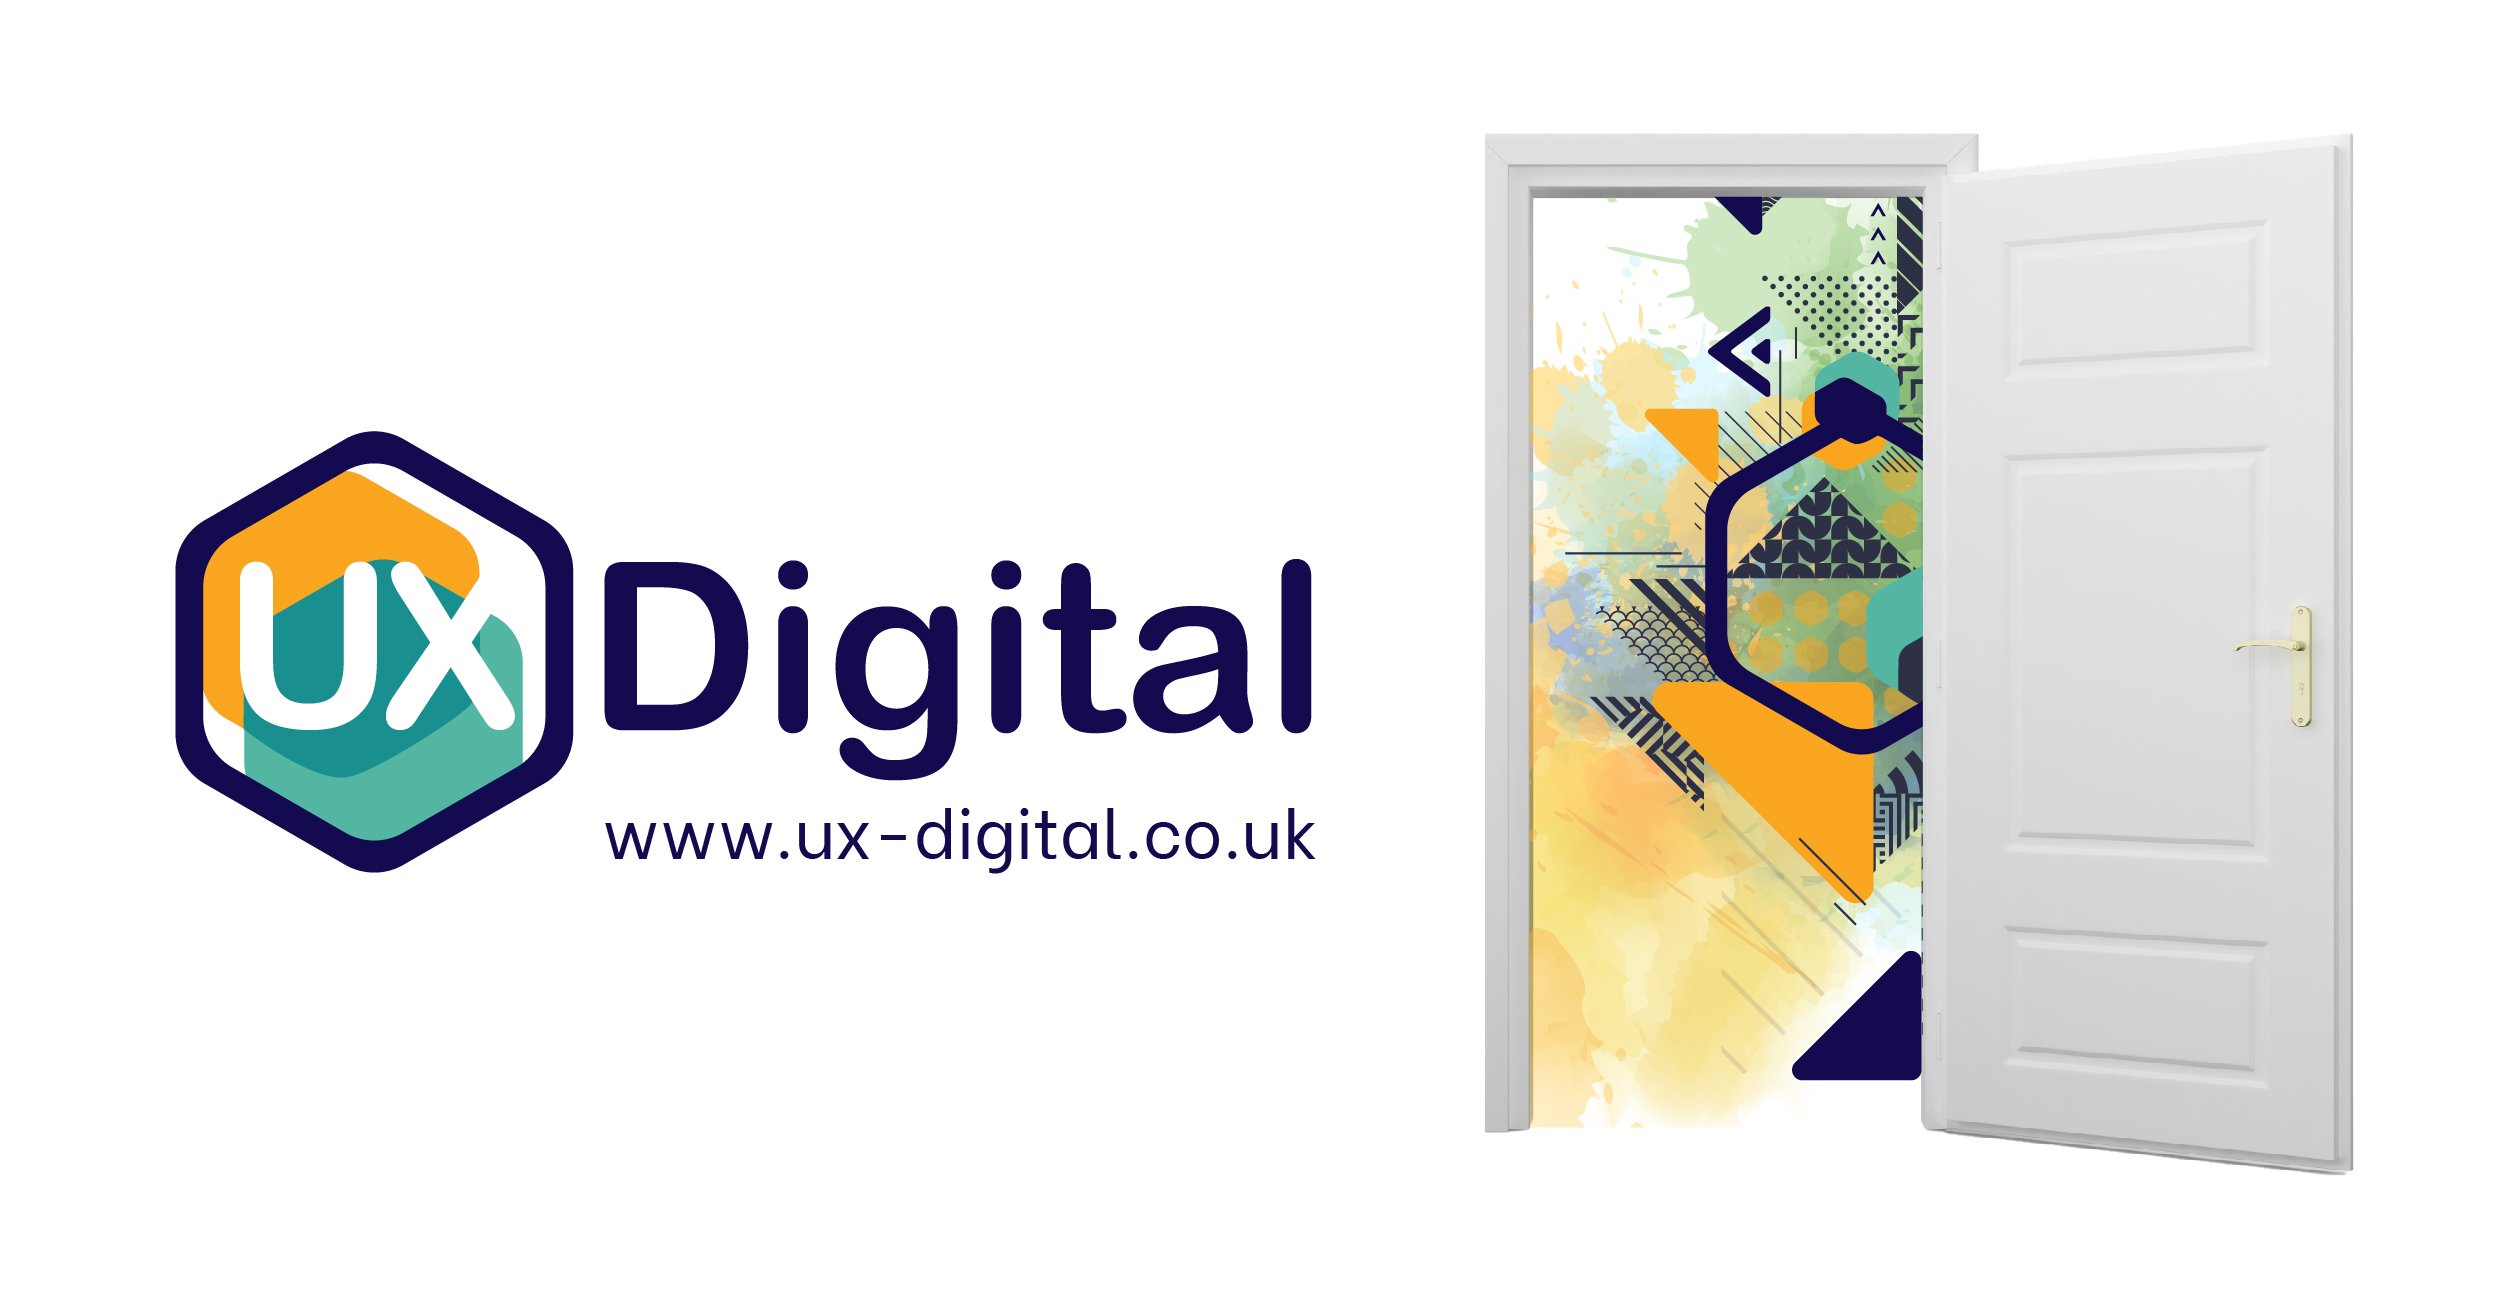 (c) Ux-digital.co.uk